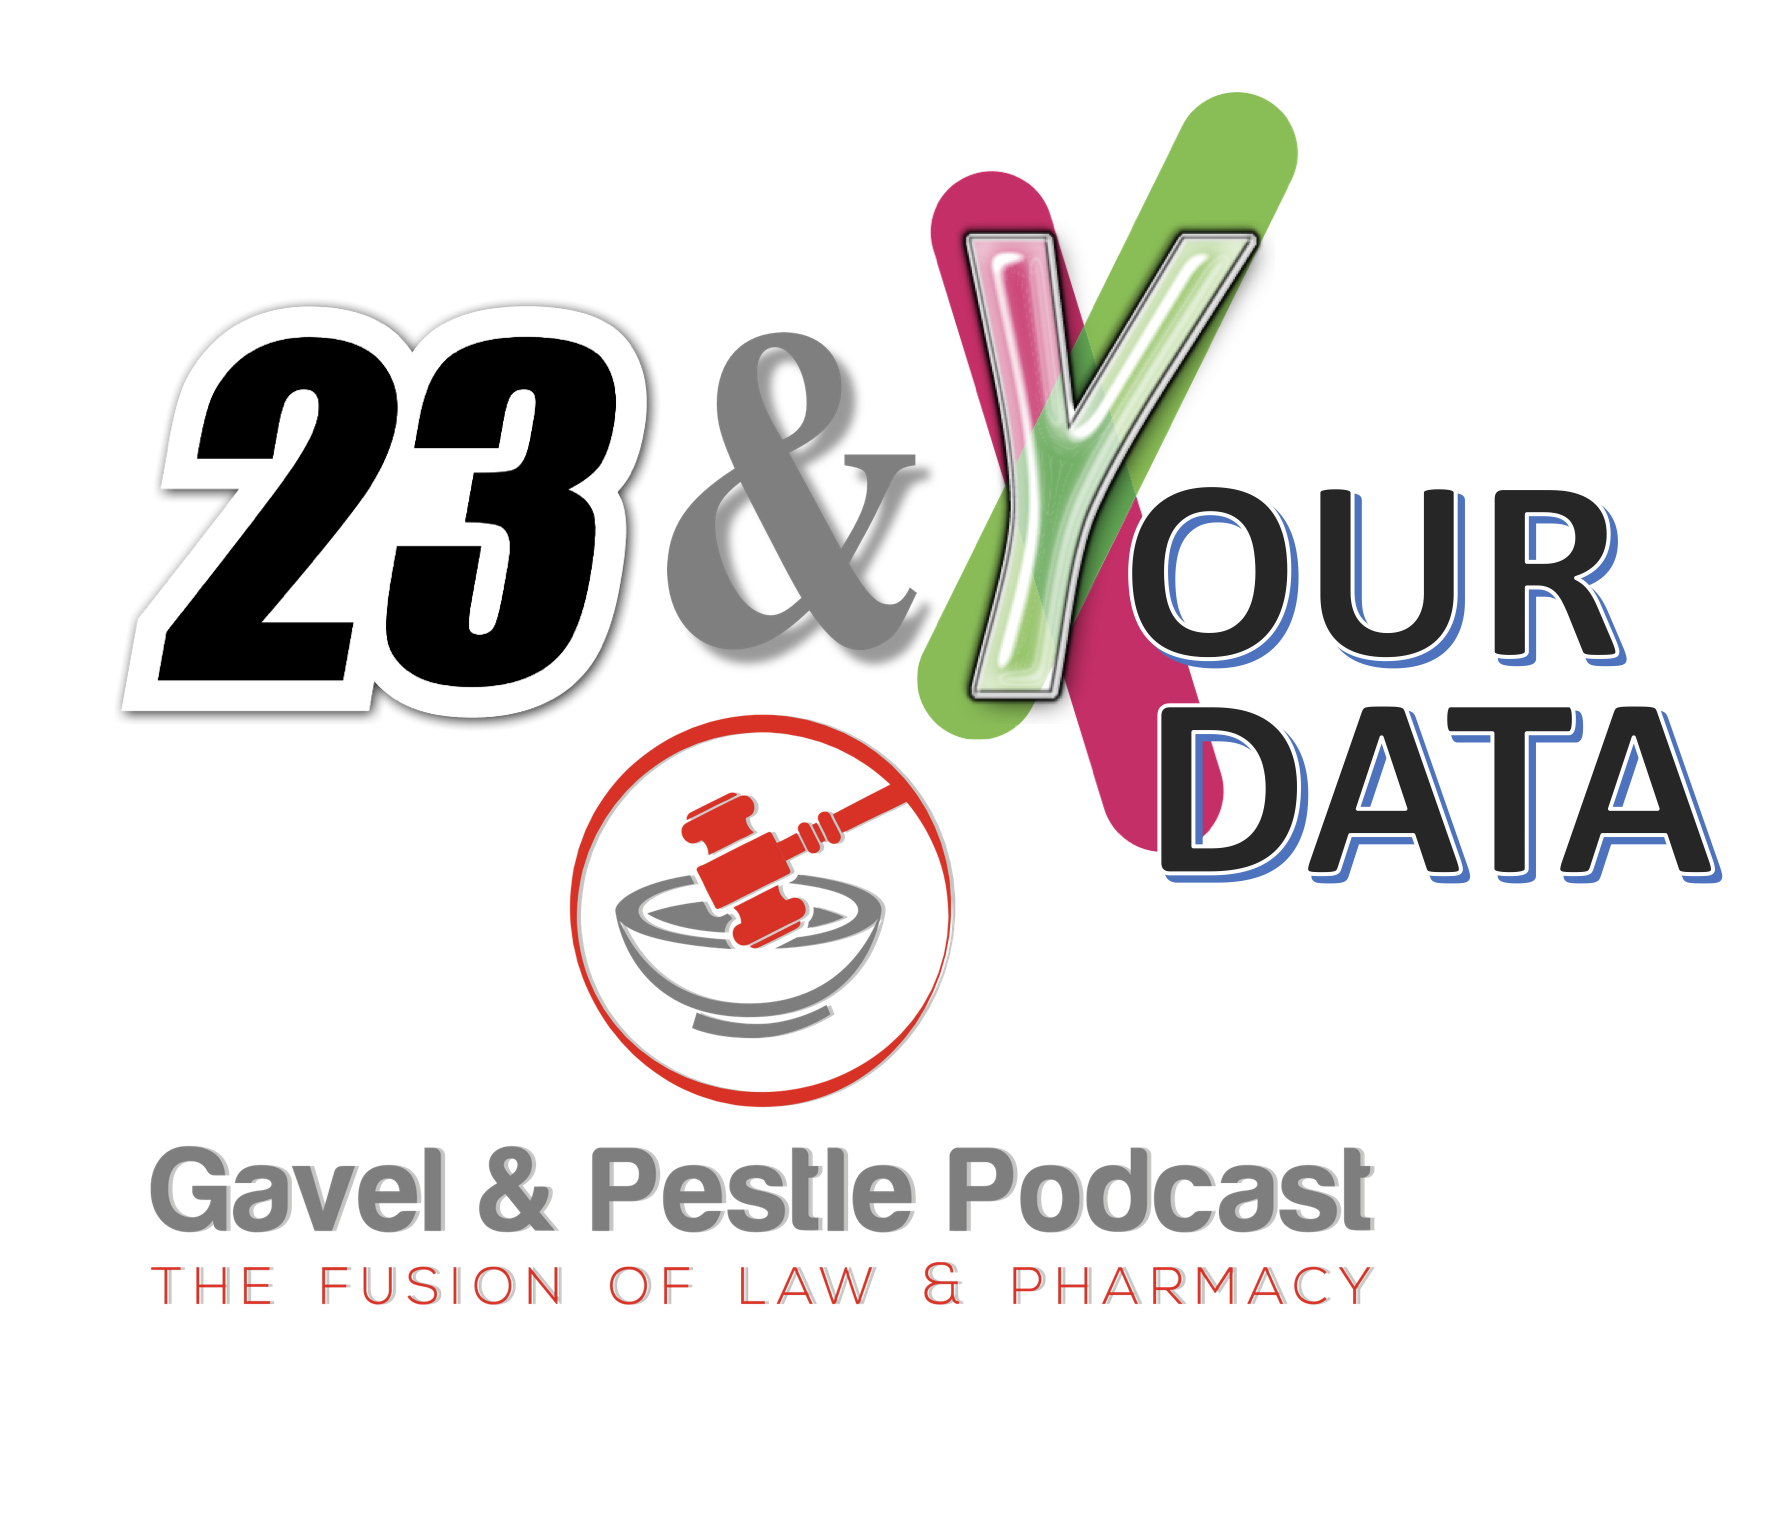 23 & Your Data - Gavel & Pestle Podcast - PPN Episode 774